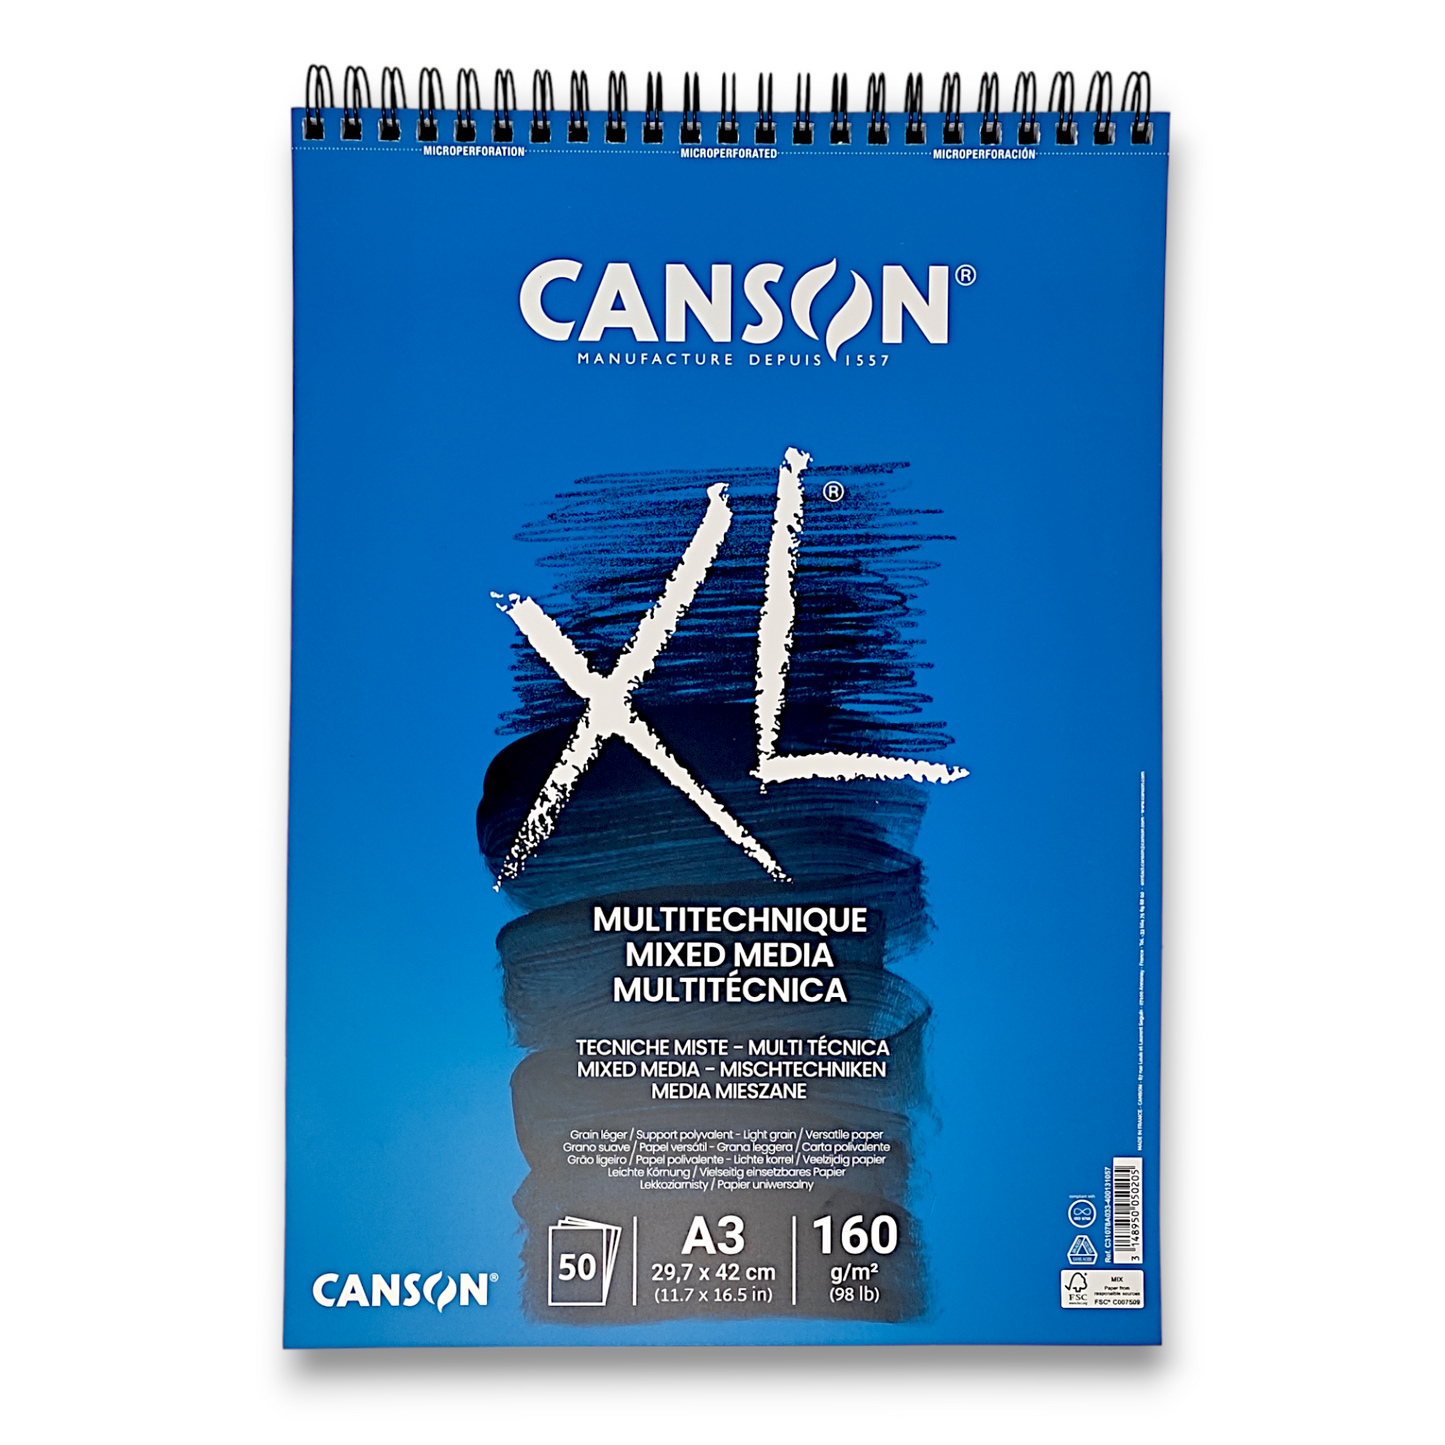 CANSON XL MIX MEDIA - Tecniche miste